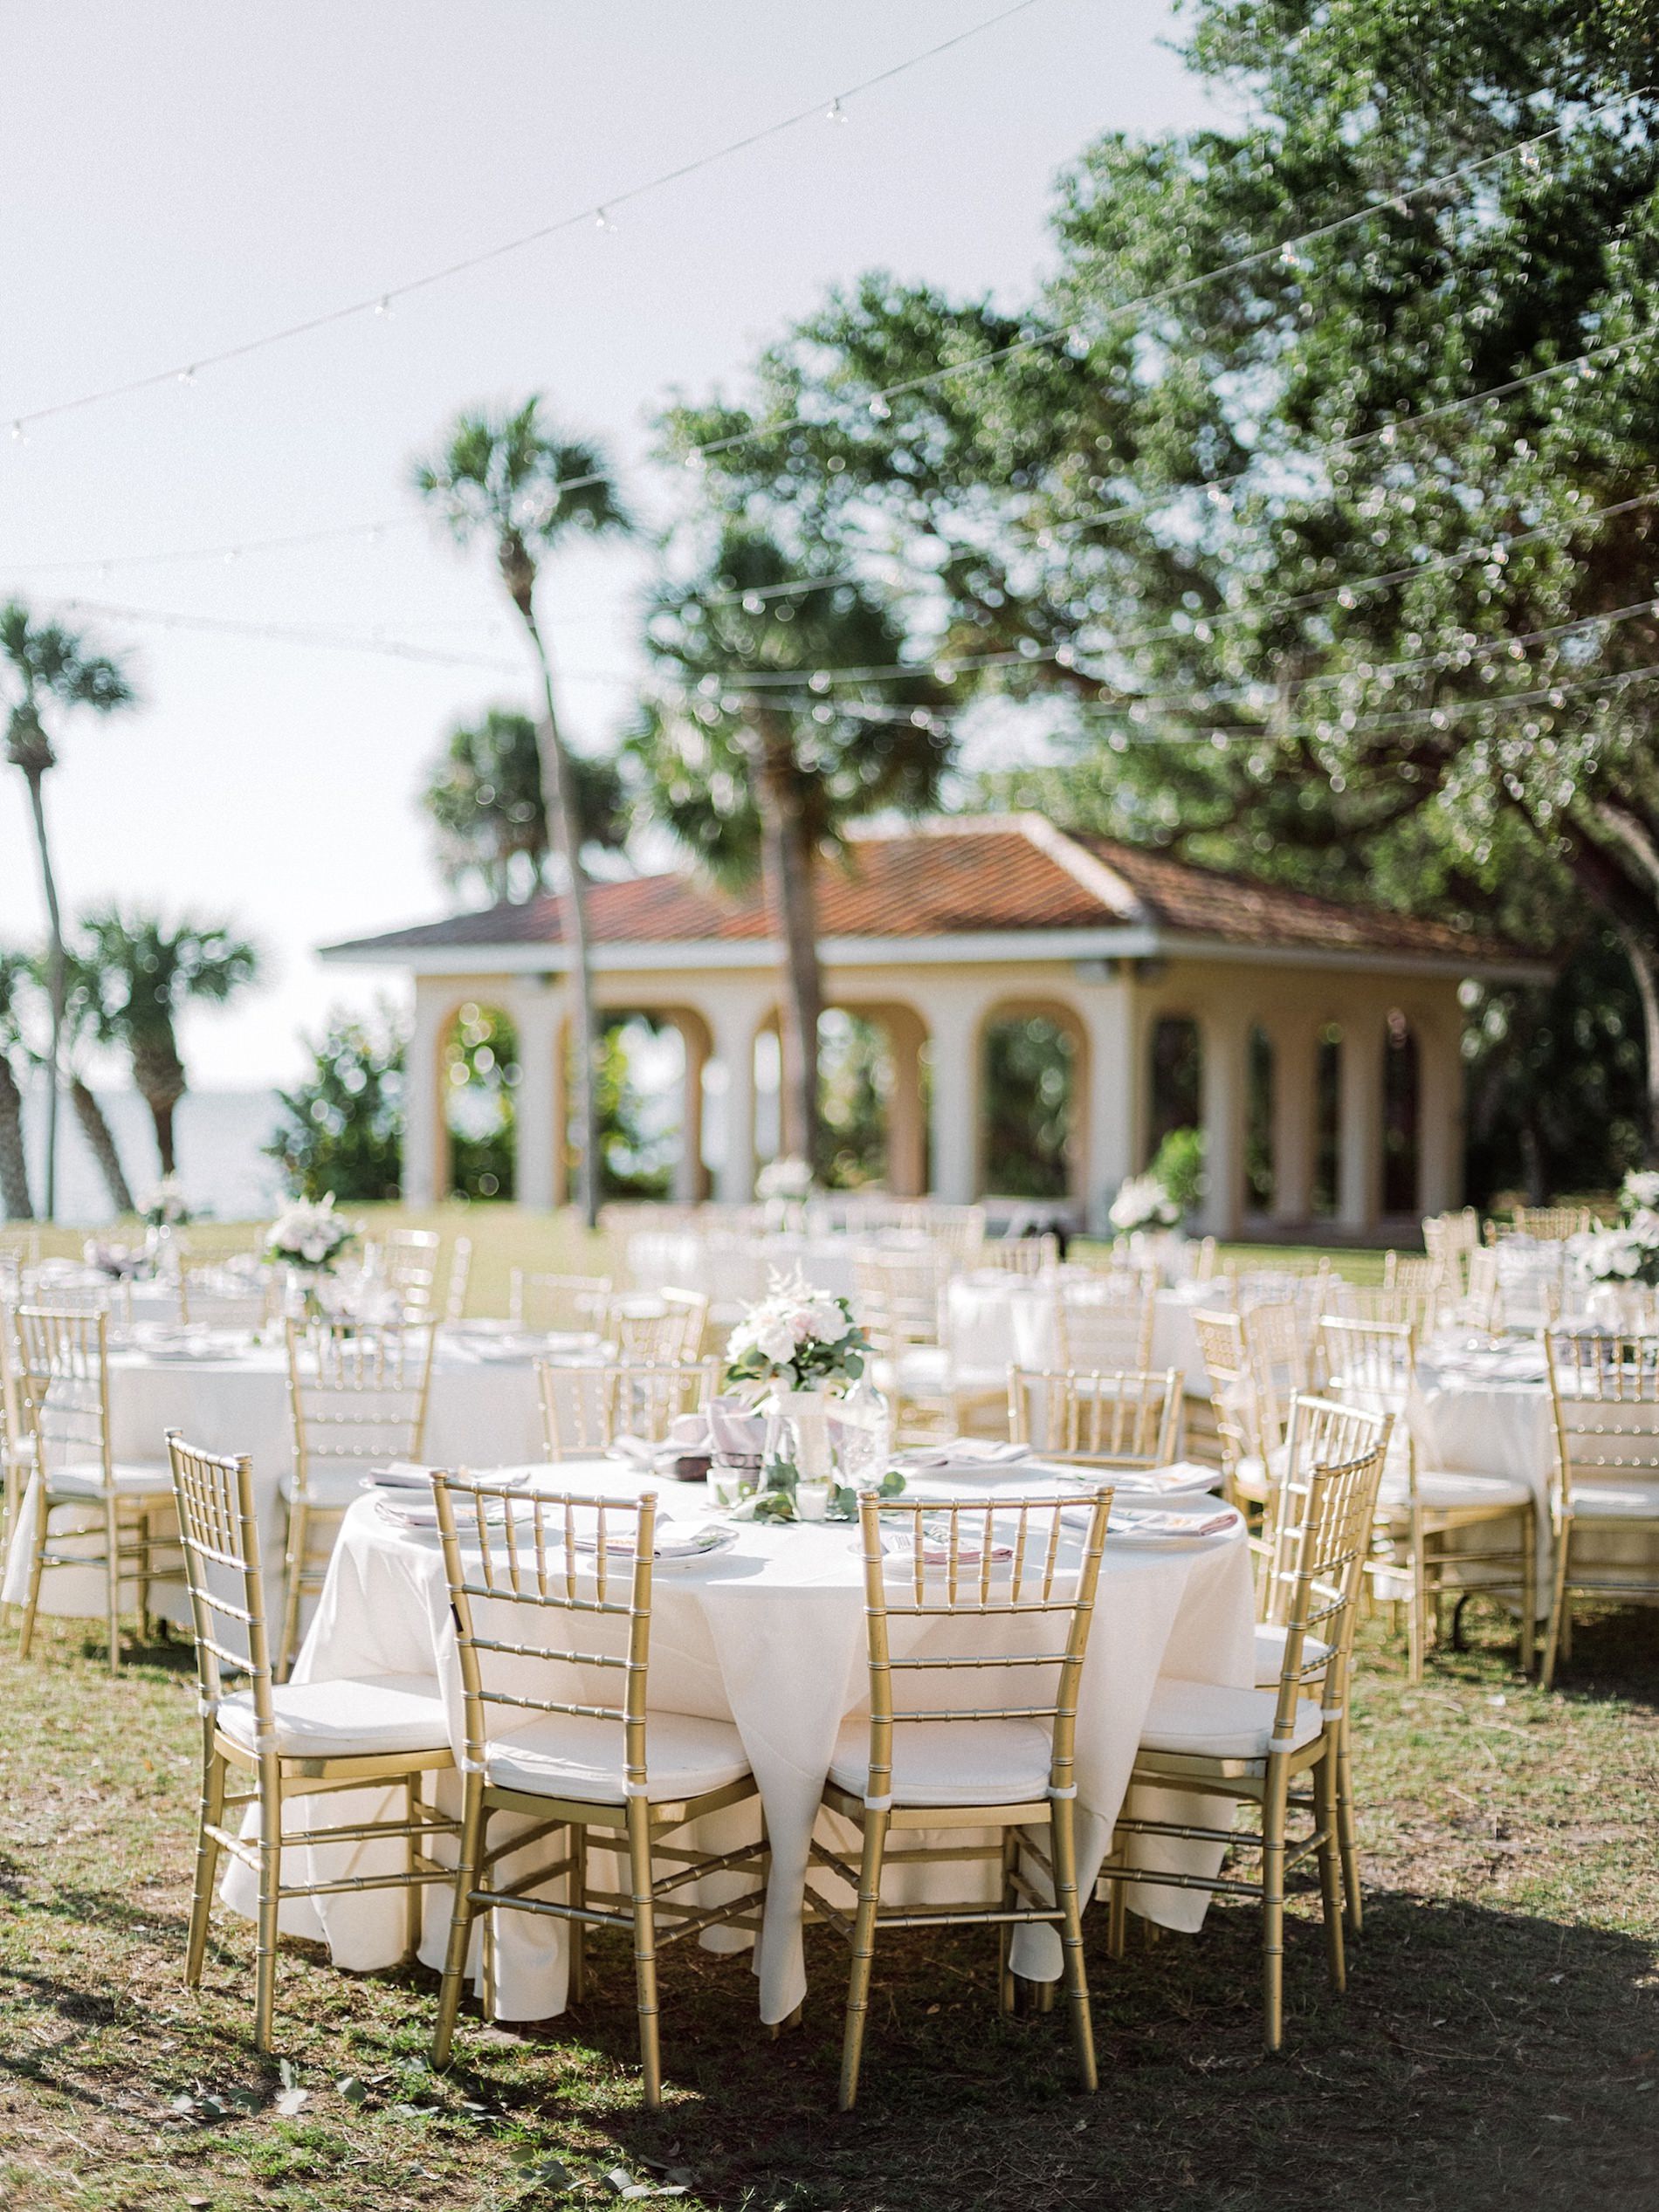 Romantic Elegant Outdoor Garden Wedding Reception Decor, Round Tables with White Tablecloths, Gold Chiavari Chairs and Low Floral Centerpieces | Sarasota Wedding Venue Powel Crosley Estate